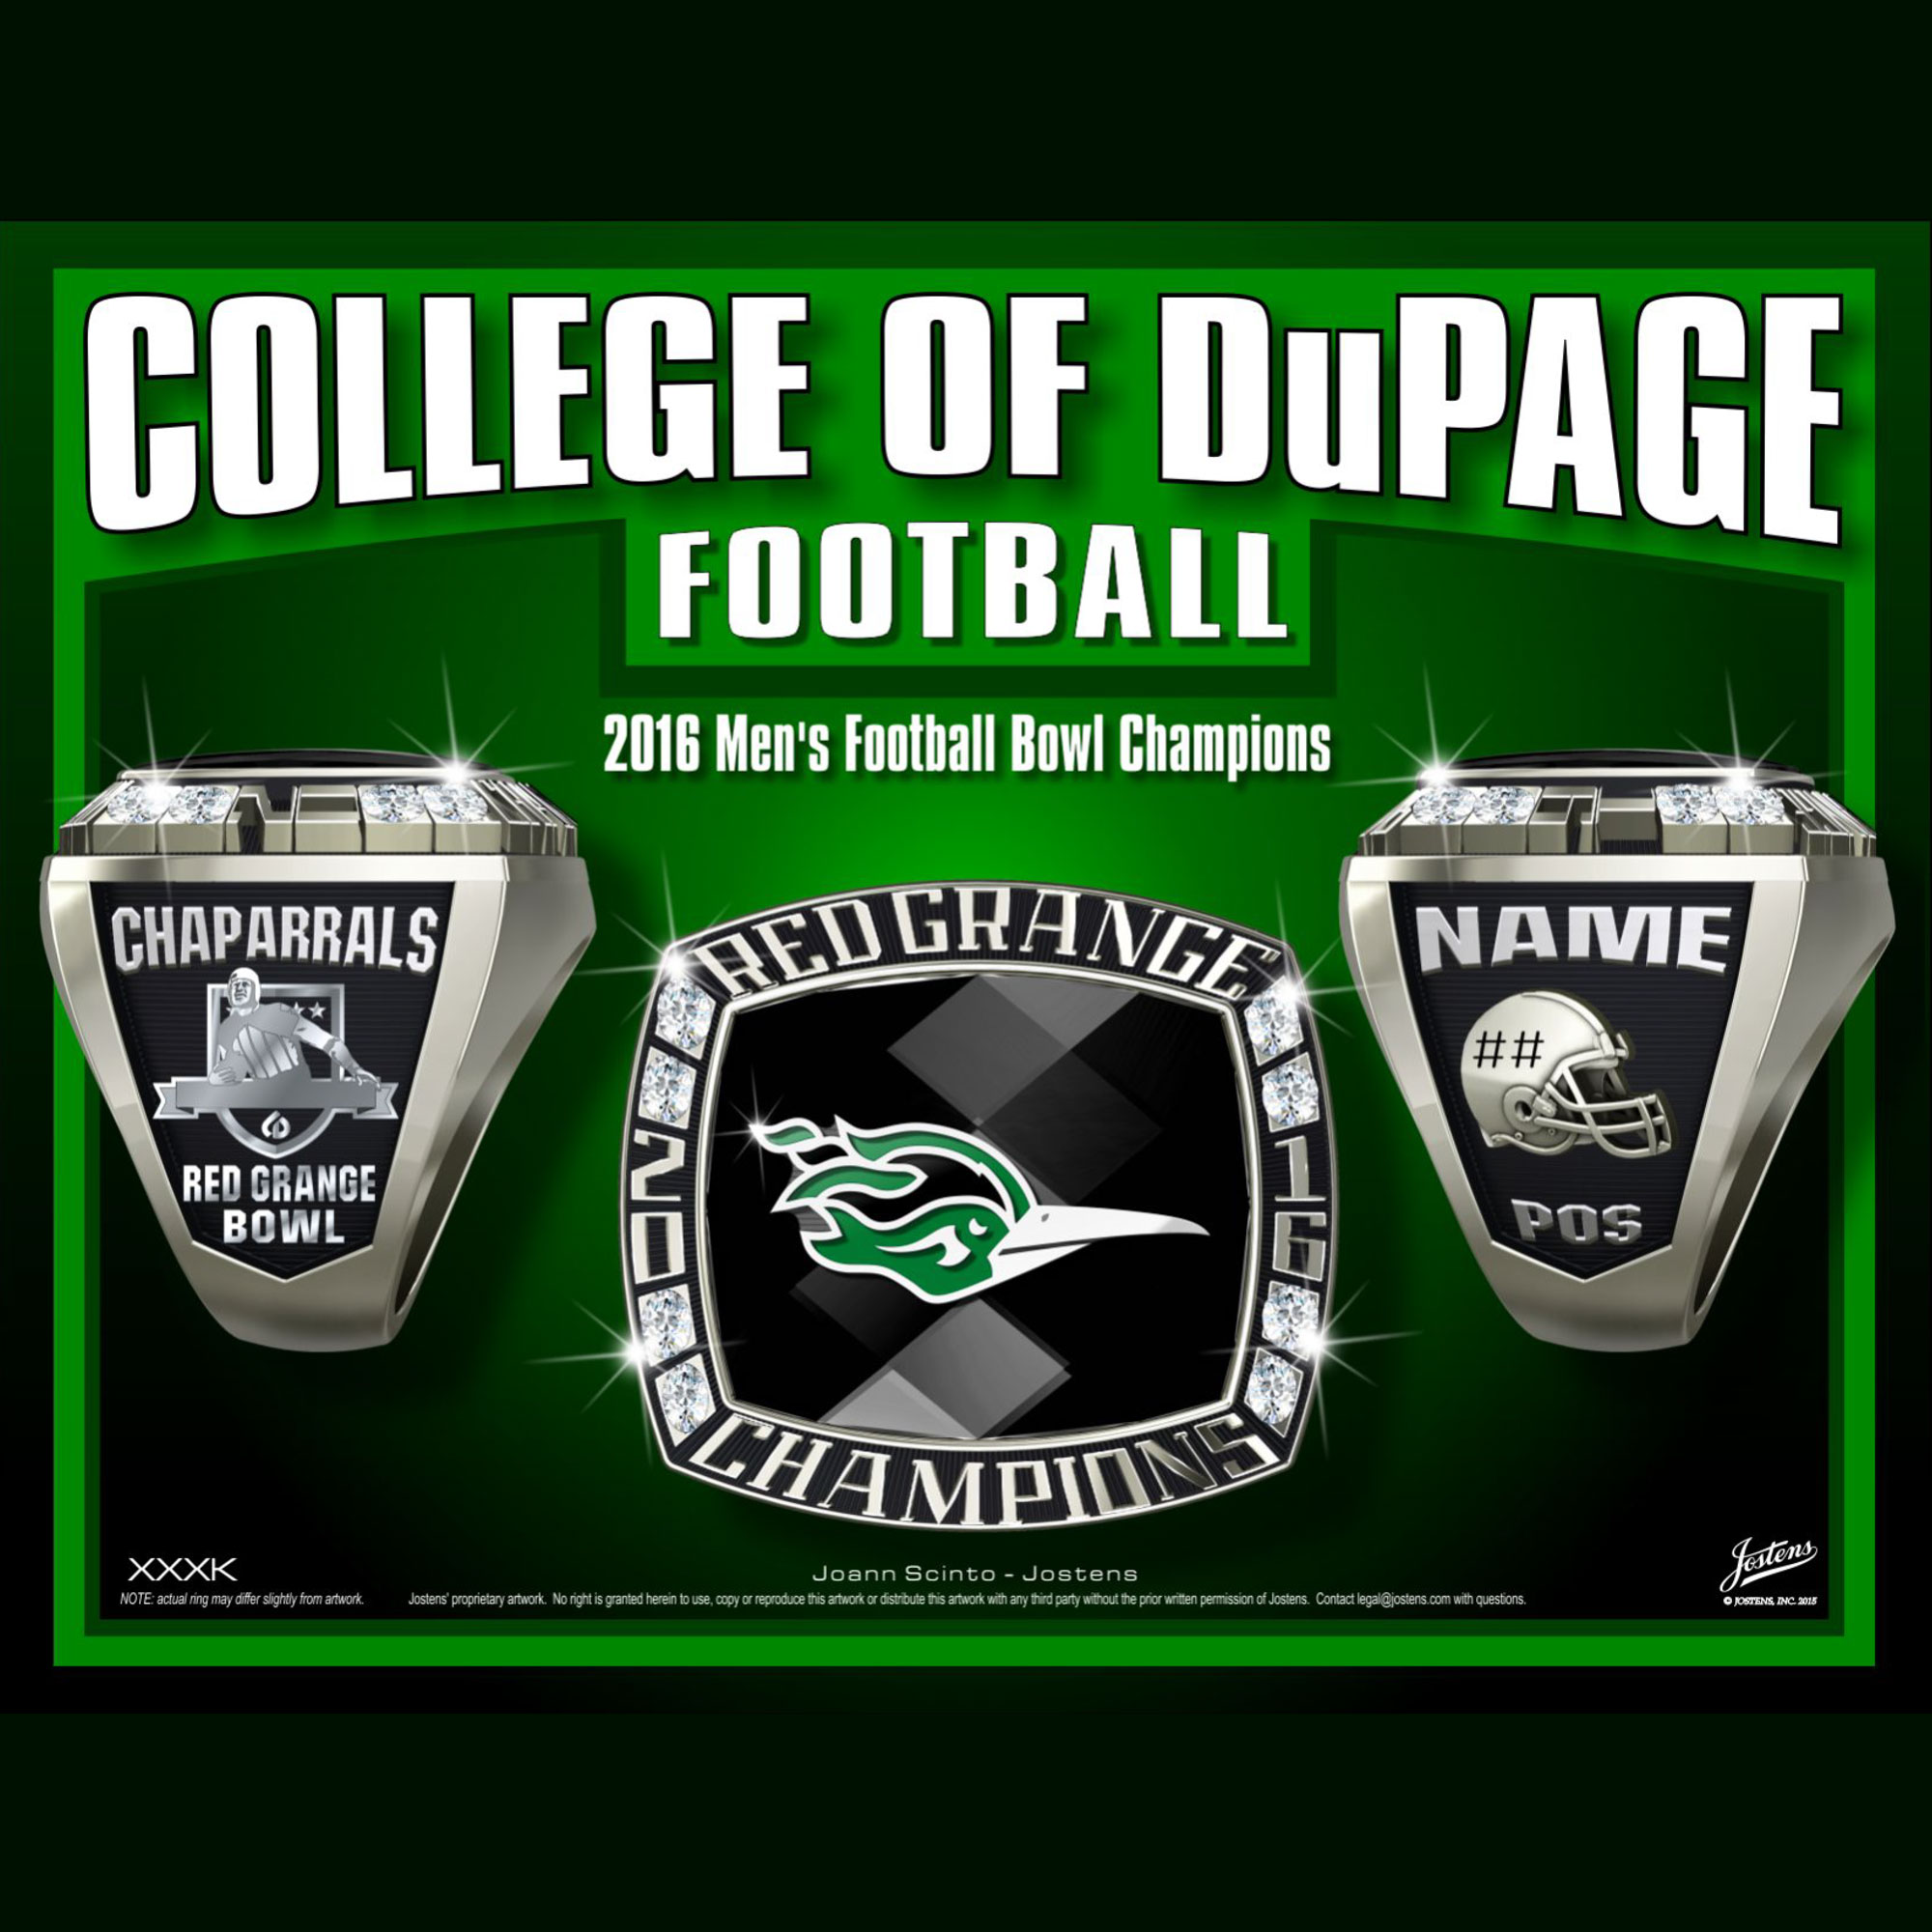 College of Dupage Men's Football 2016 Red Grange Bowl Championship Ring